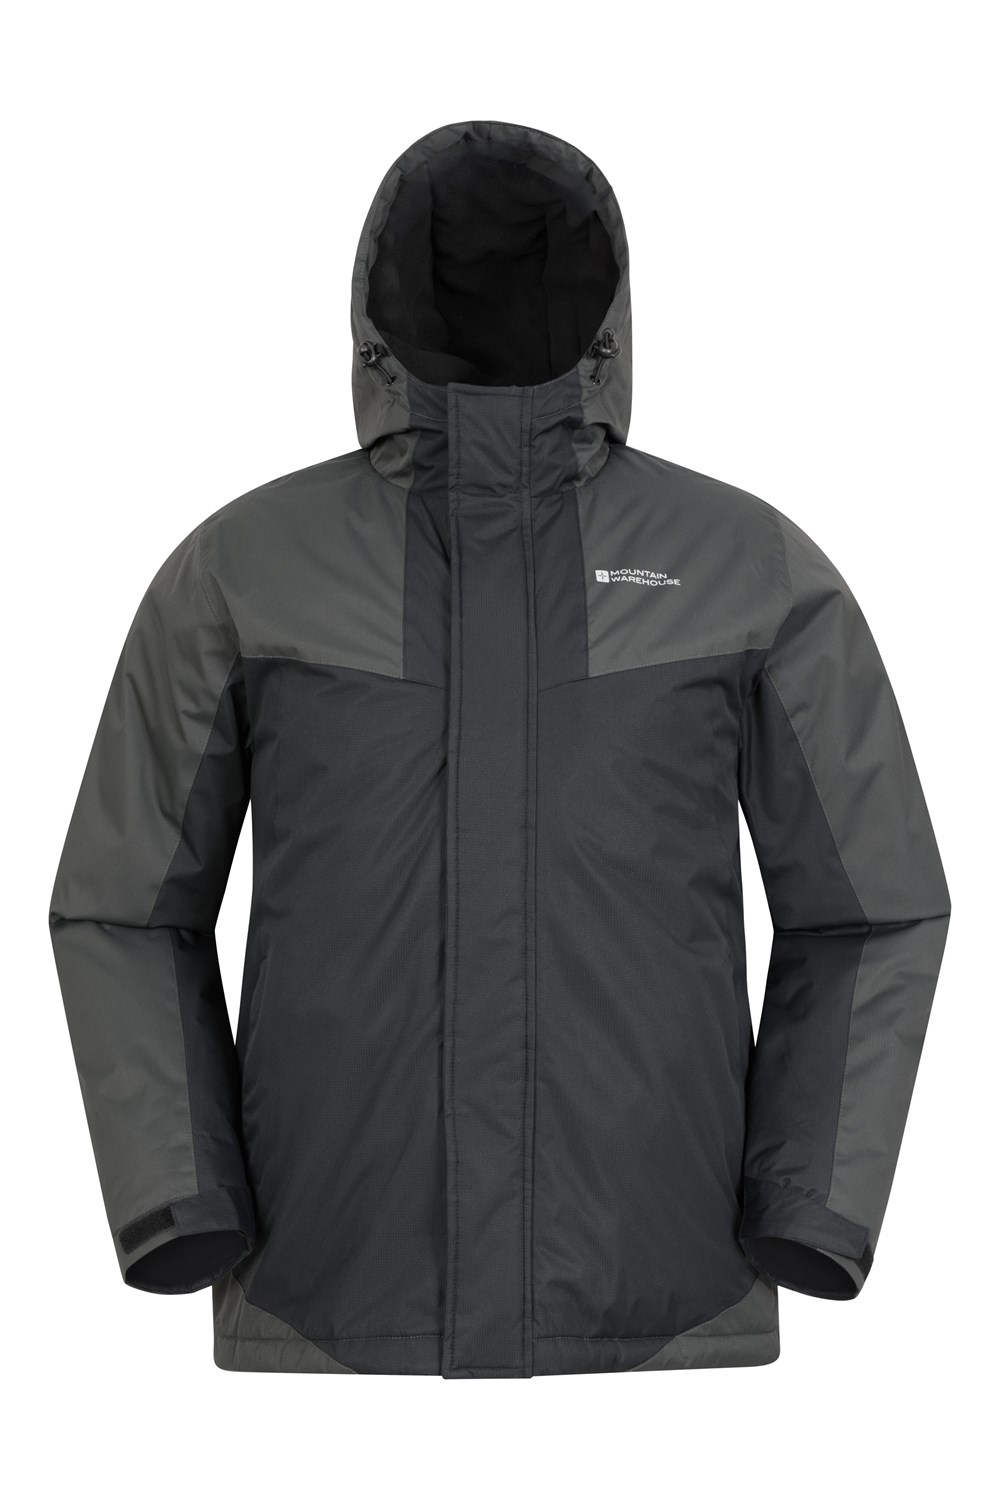 Mountain Warehouse Dusk Men's Ski Jacket Water Resistant Rain Coat with ...